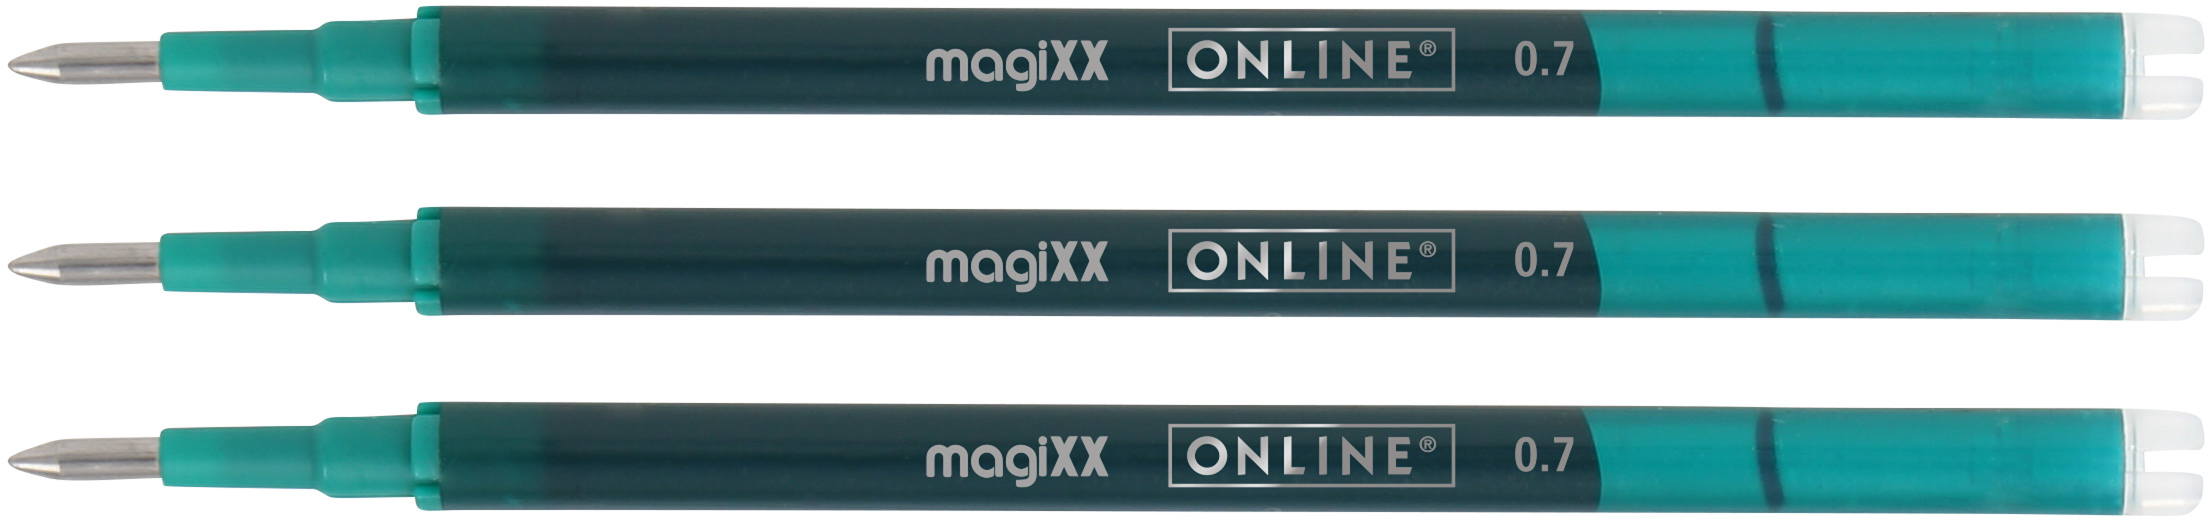 ONLINE Mine Gel MagiXX 40164/3 turquoise, Tag-Bag 0.7mm